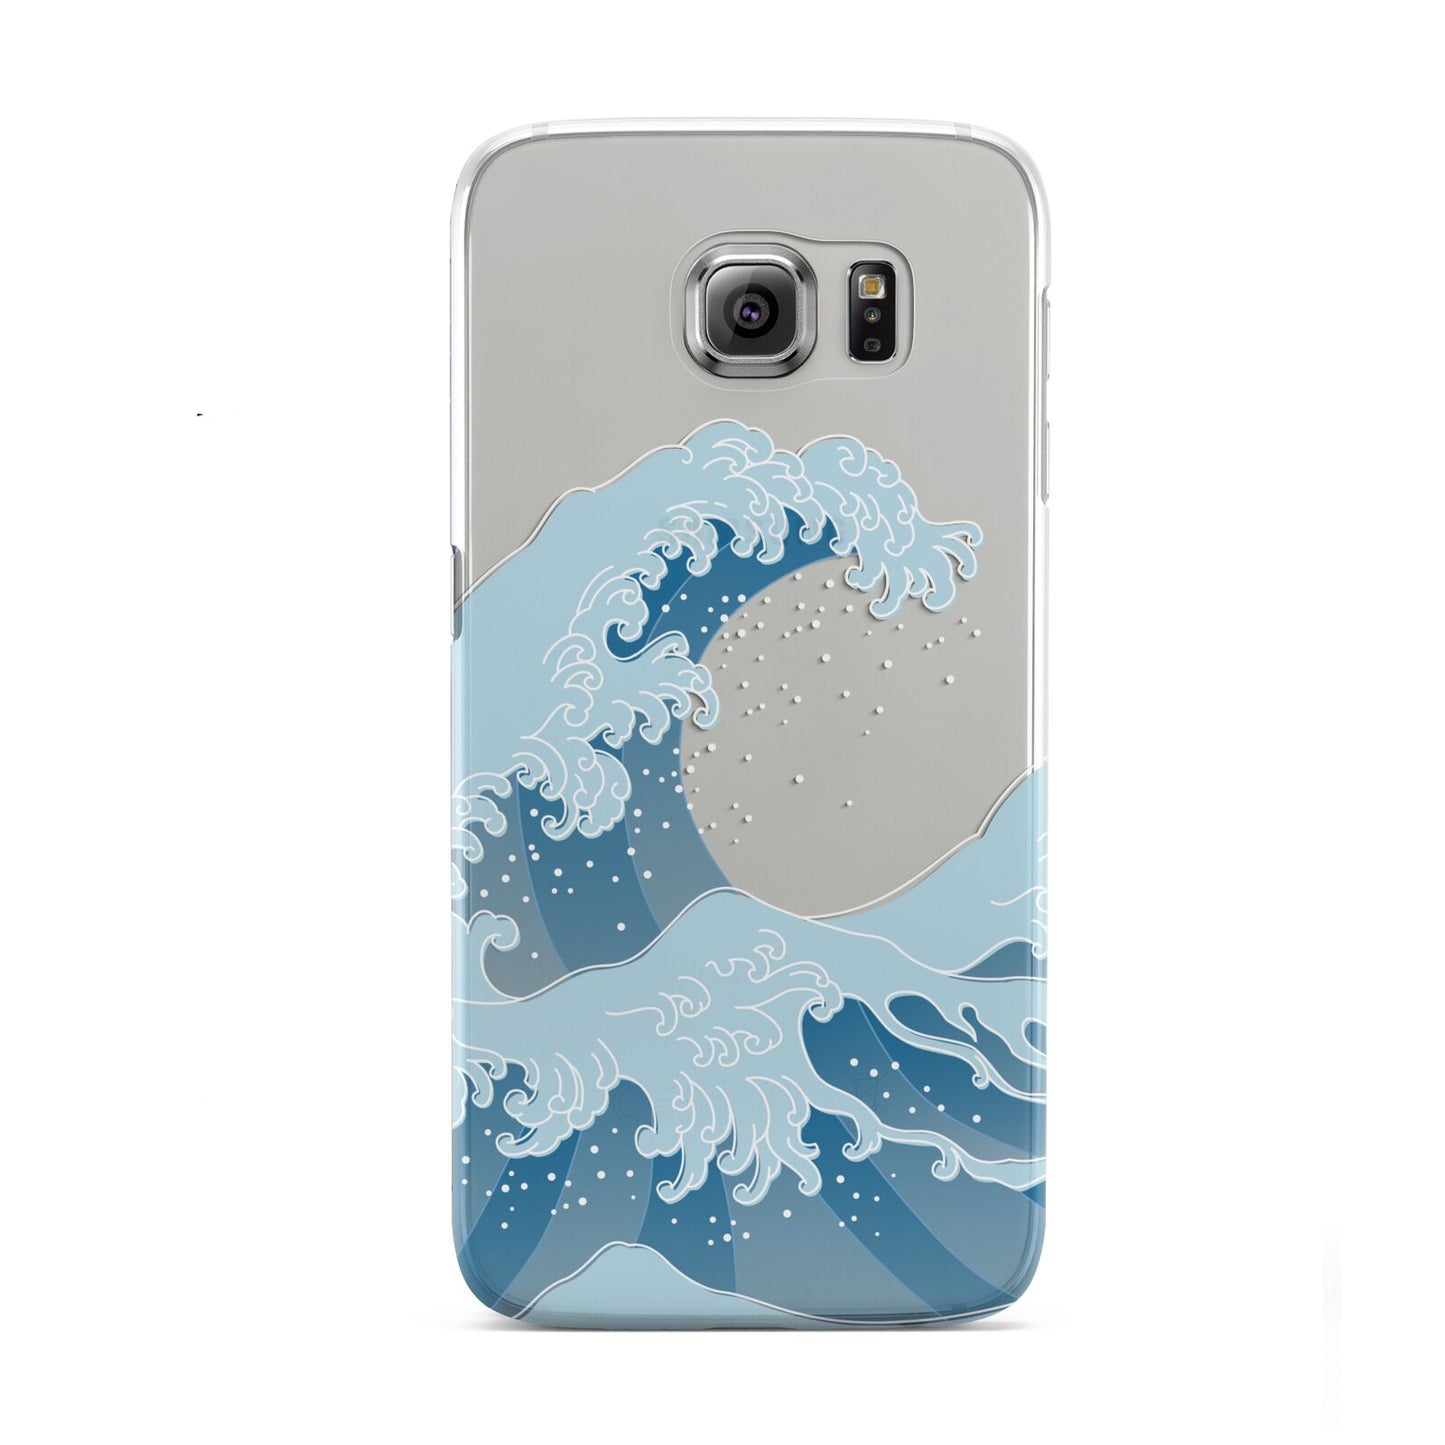 Great Wave Illustration Samsung Galaxy S6 Case